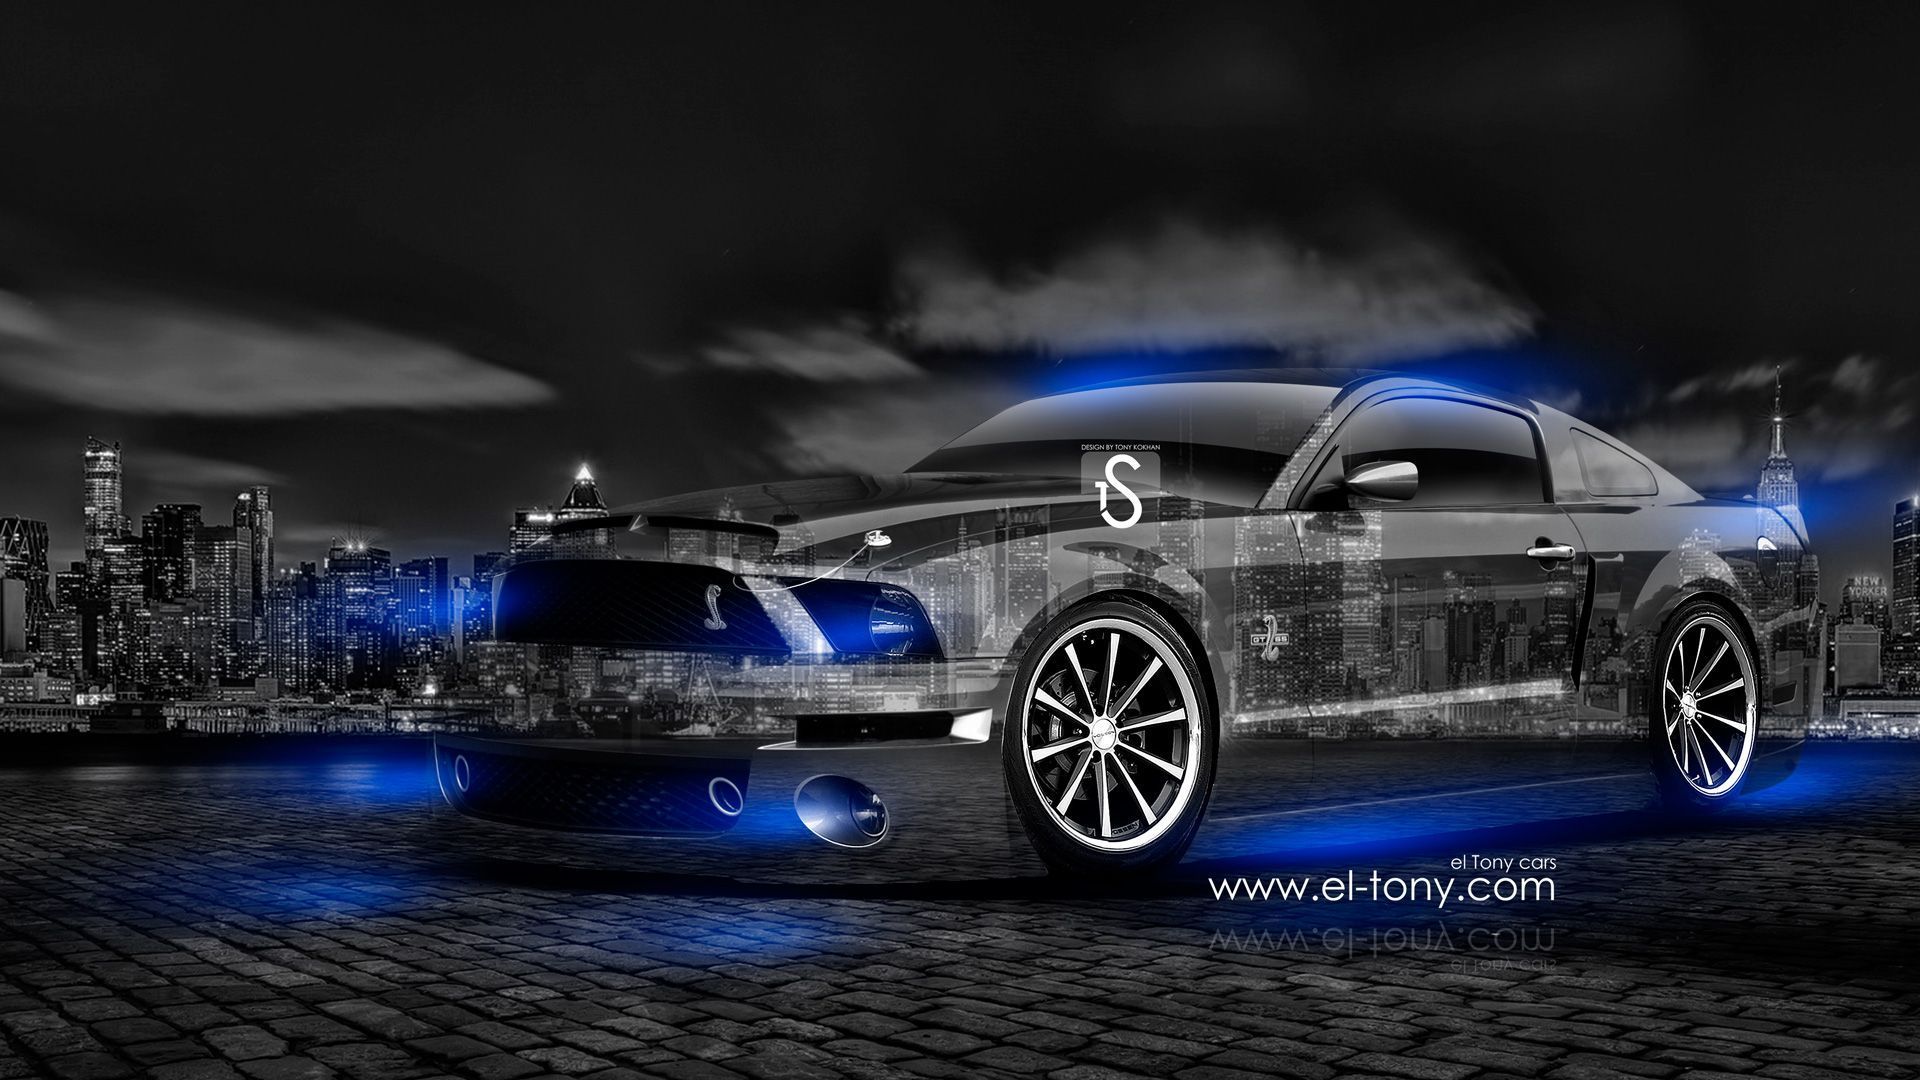 Muscle Car Mustang Free Pc Wallpaper Download 4945 - Grivu.com